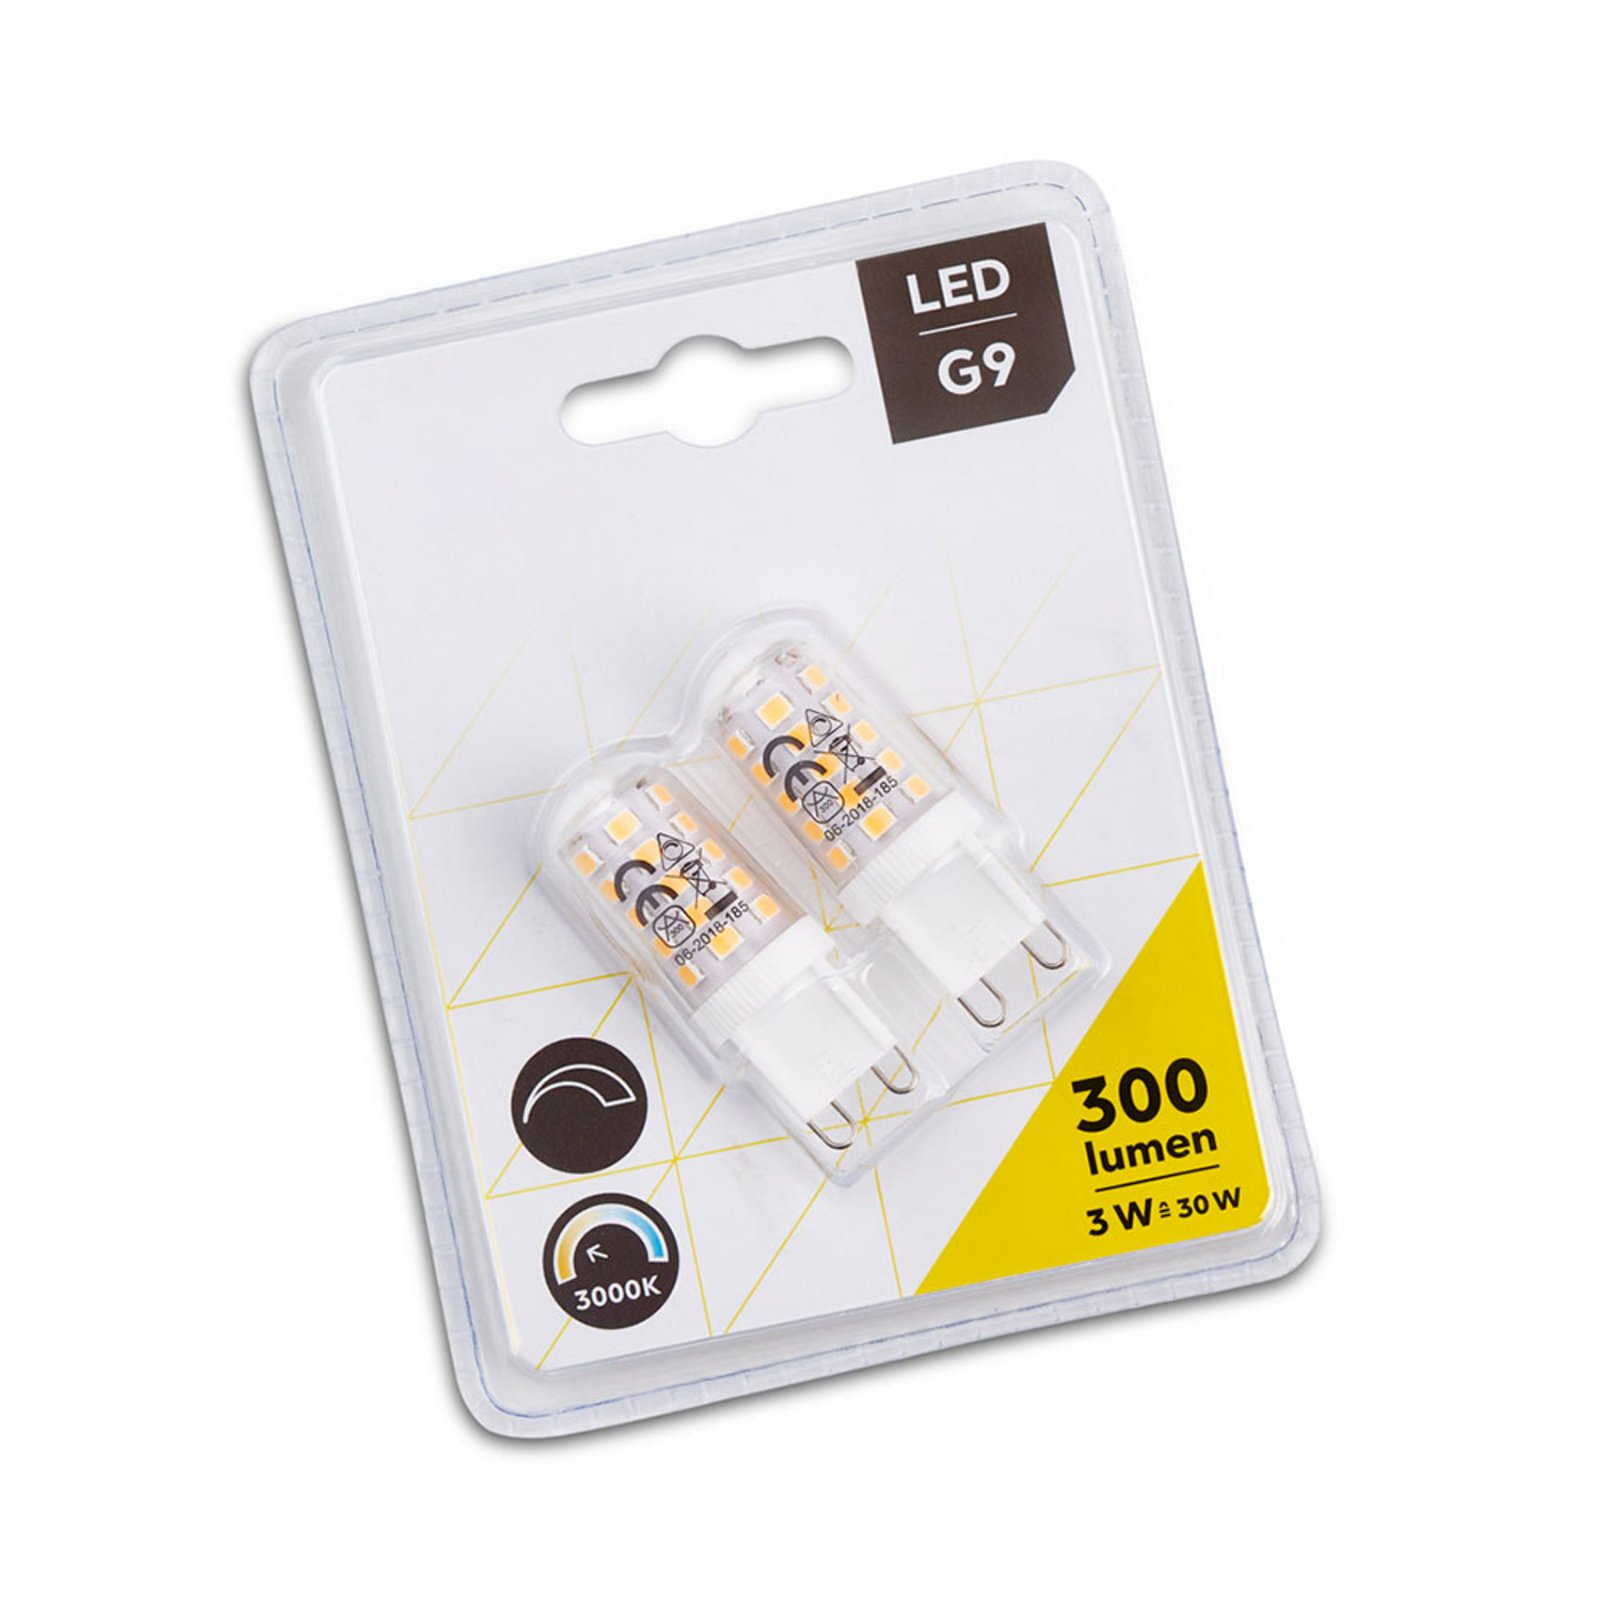 Bi-pin LED bulb G9 3W, 3,000 K, externally dimmable, set of 2